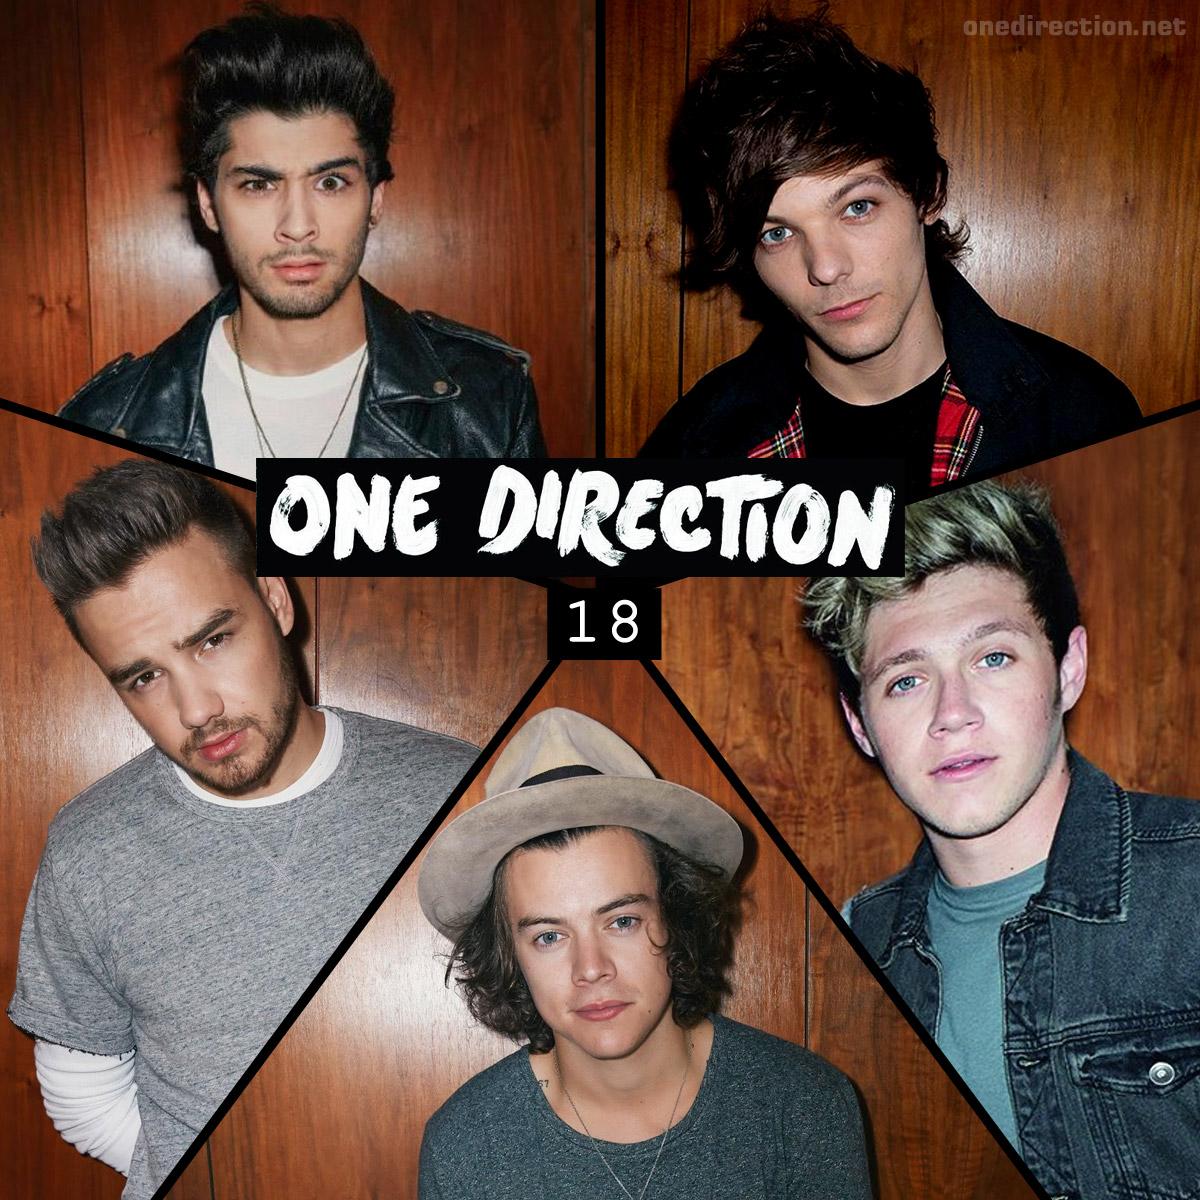 Download Lagu One Direction - 18 mp3 [3,79 MB] - Trilaf Musi
c